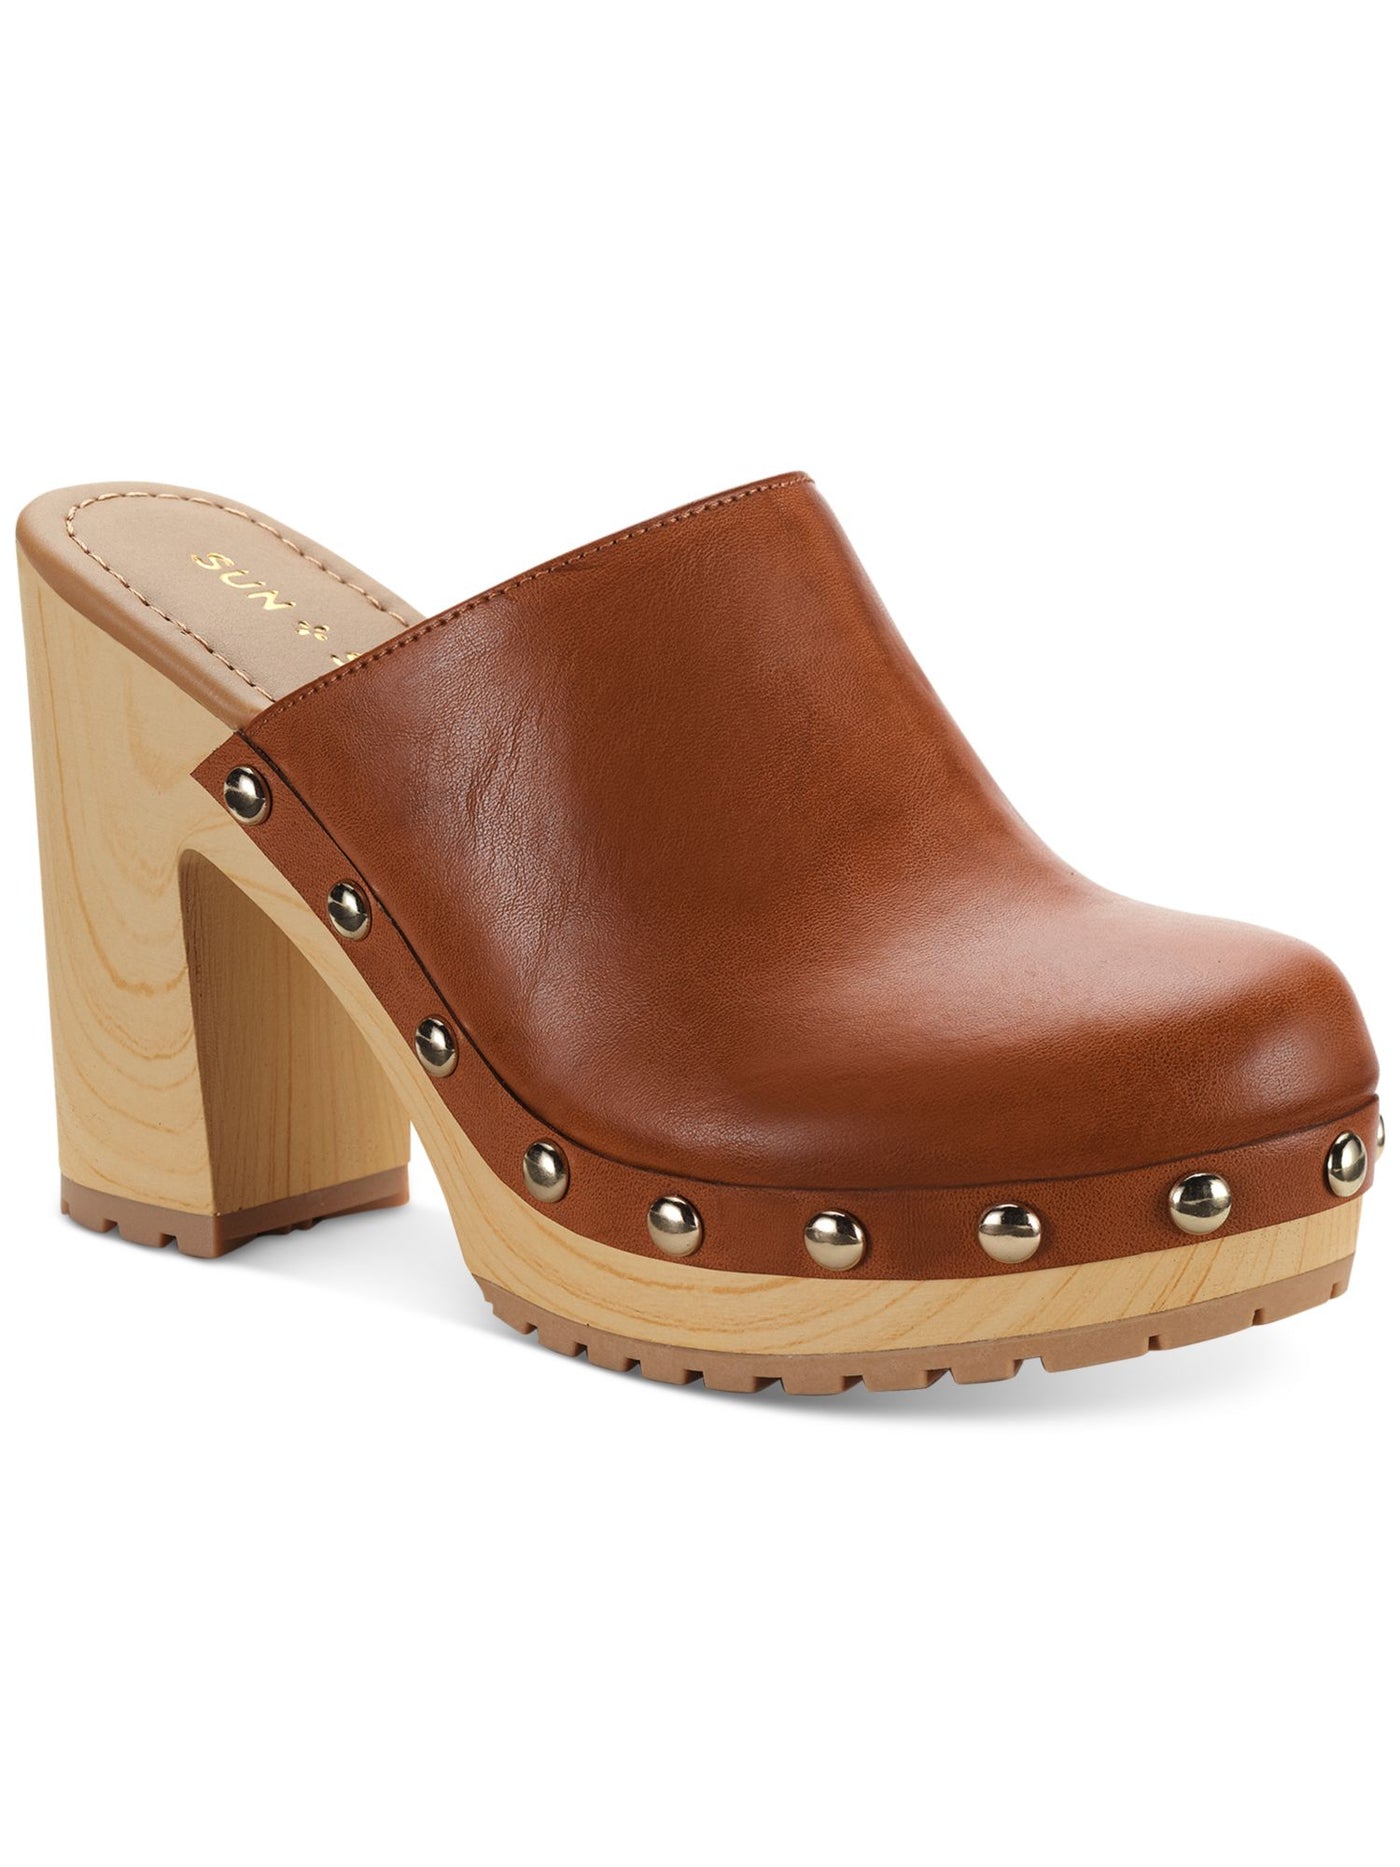 SUN STONE Womens Brown 1" Platform Goring Studded Padded Taanya Round Toe Block Heel Slip On Clogs Shoes 9.5 M